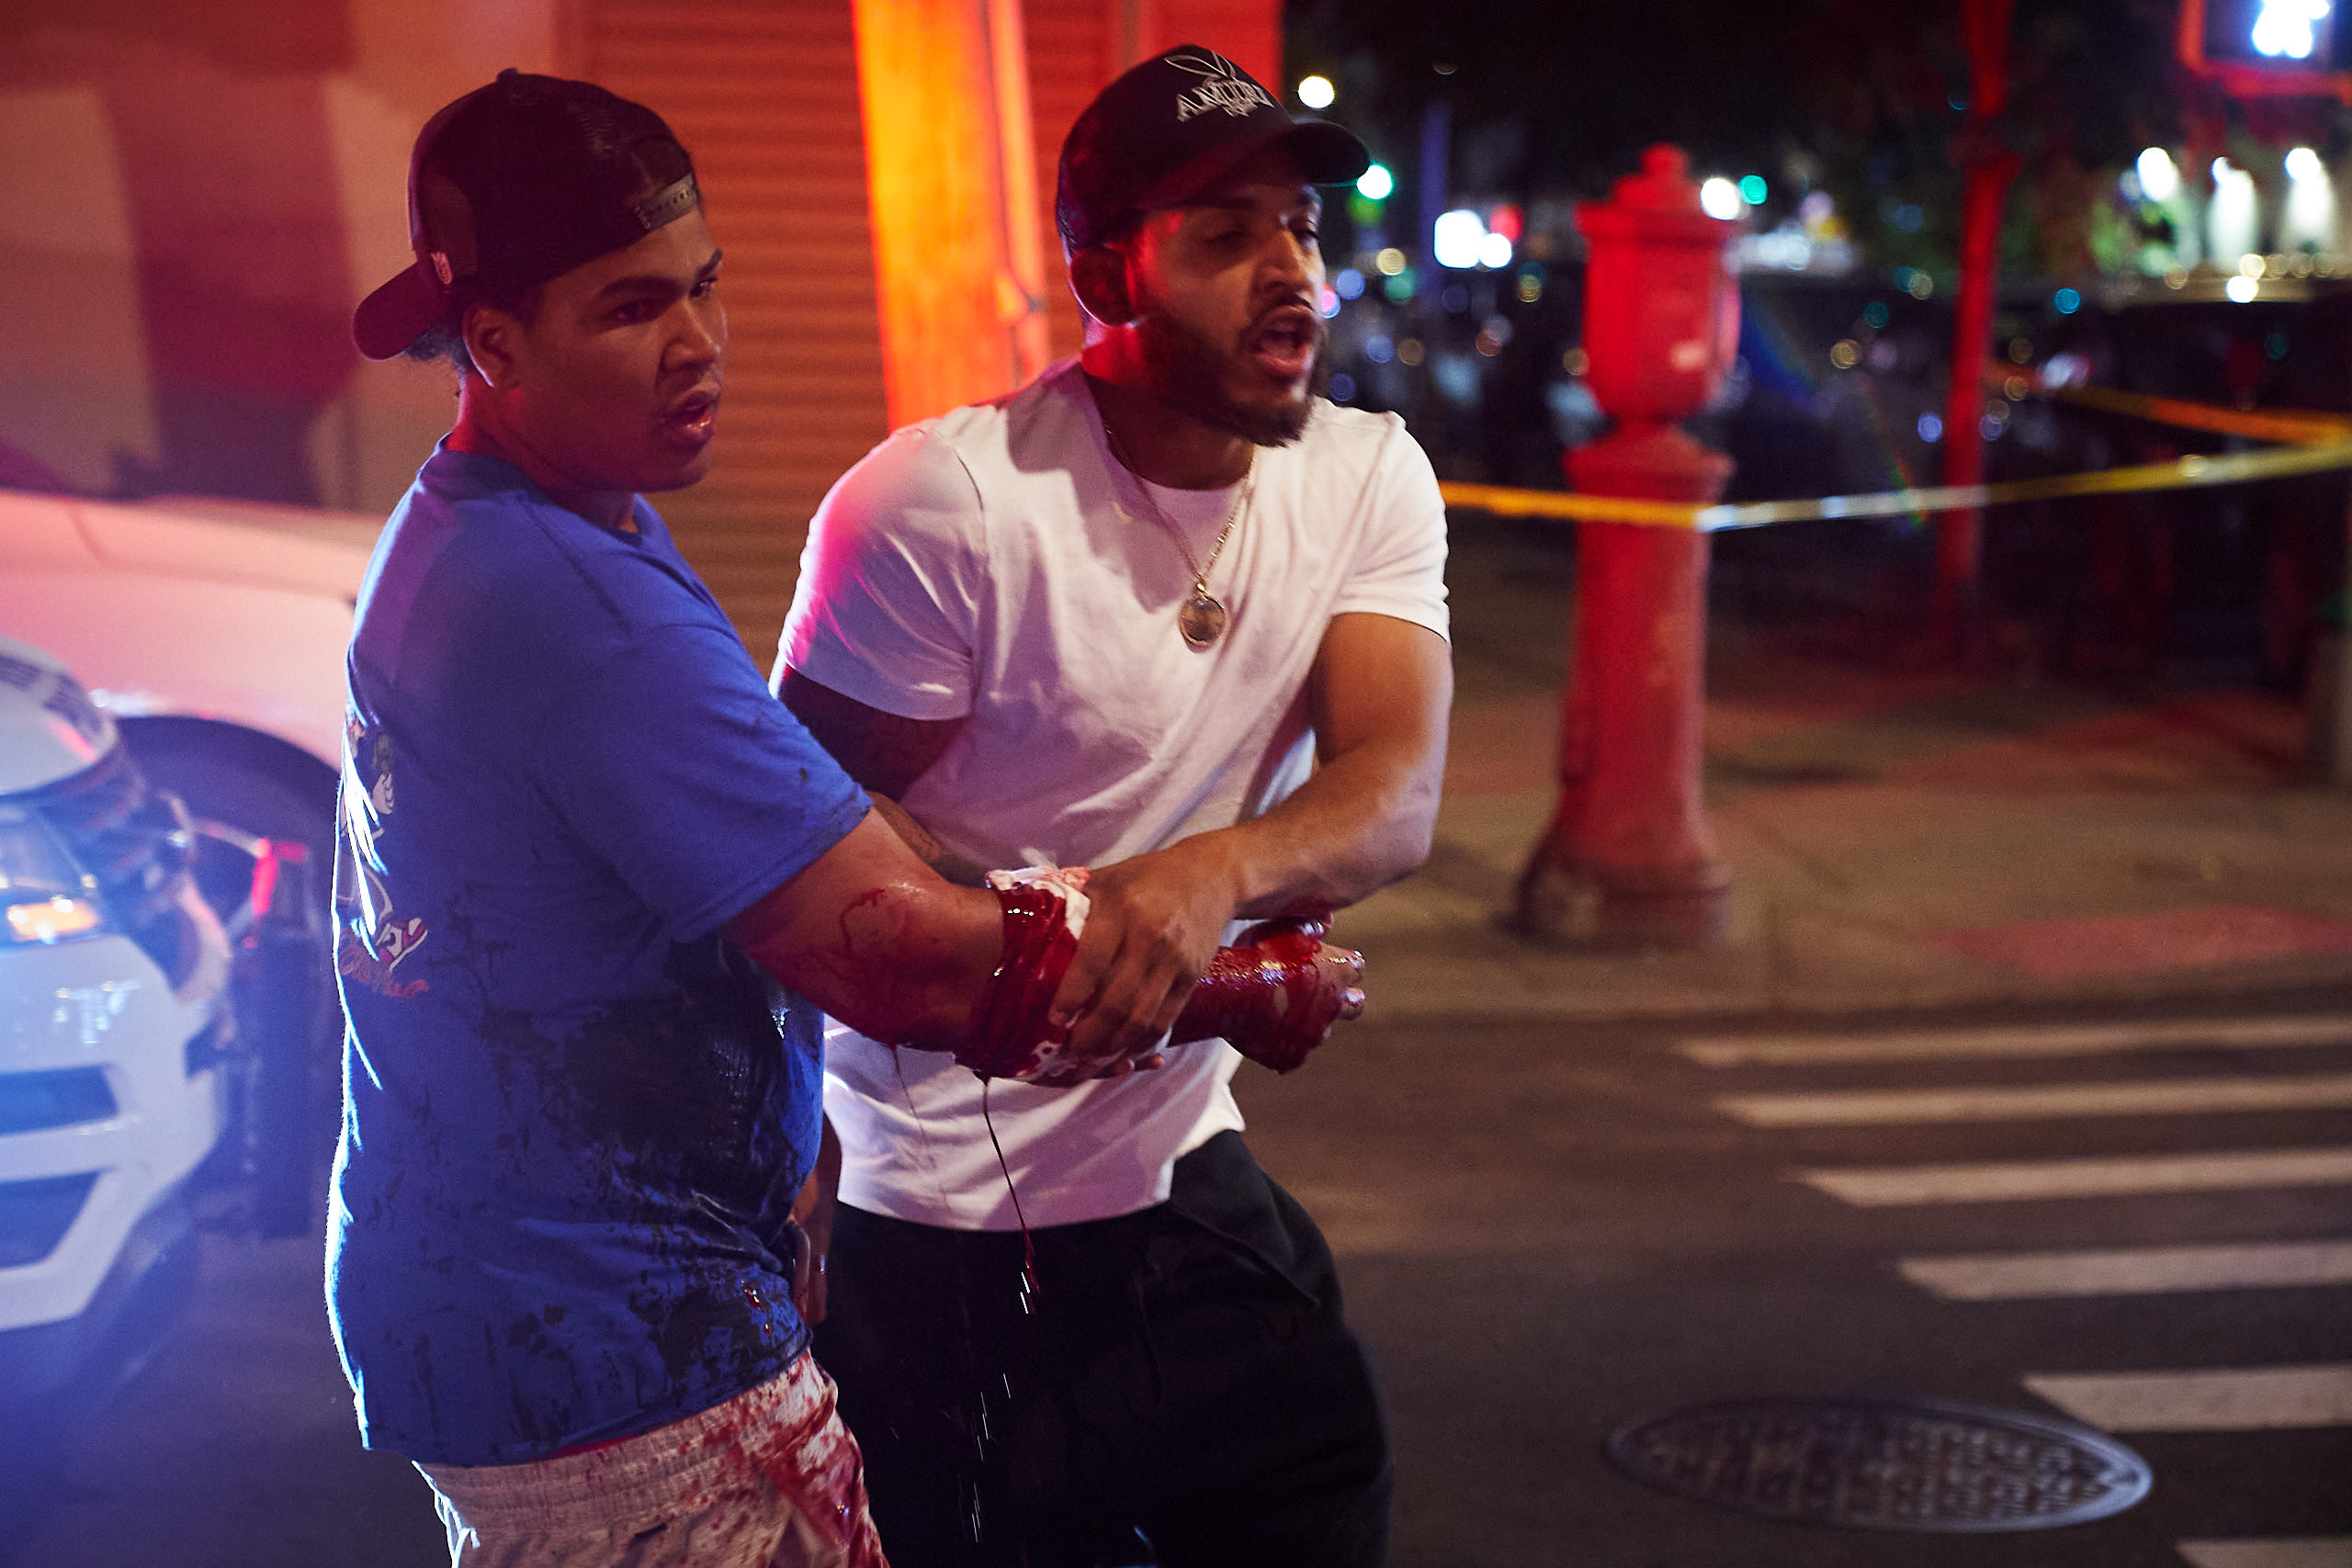 Bronx man shot in the arm